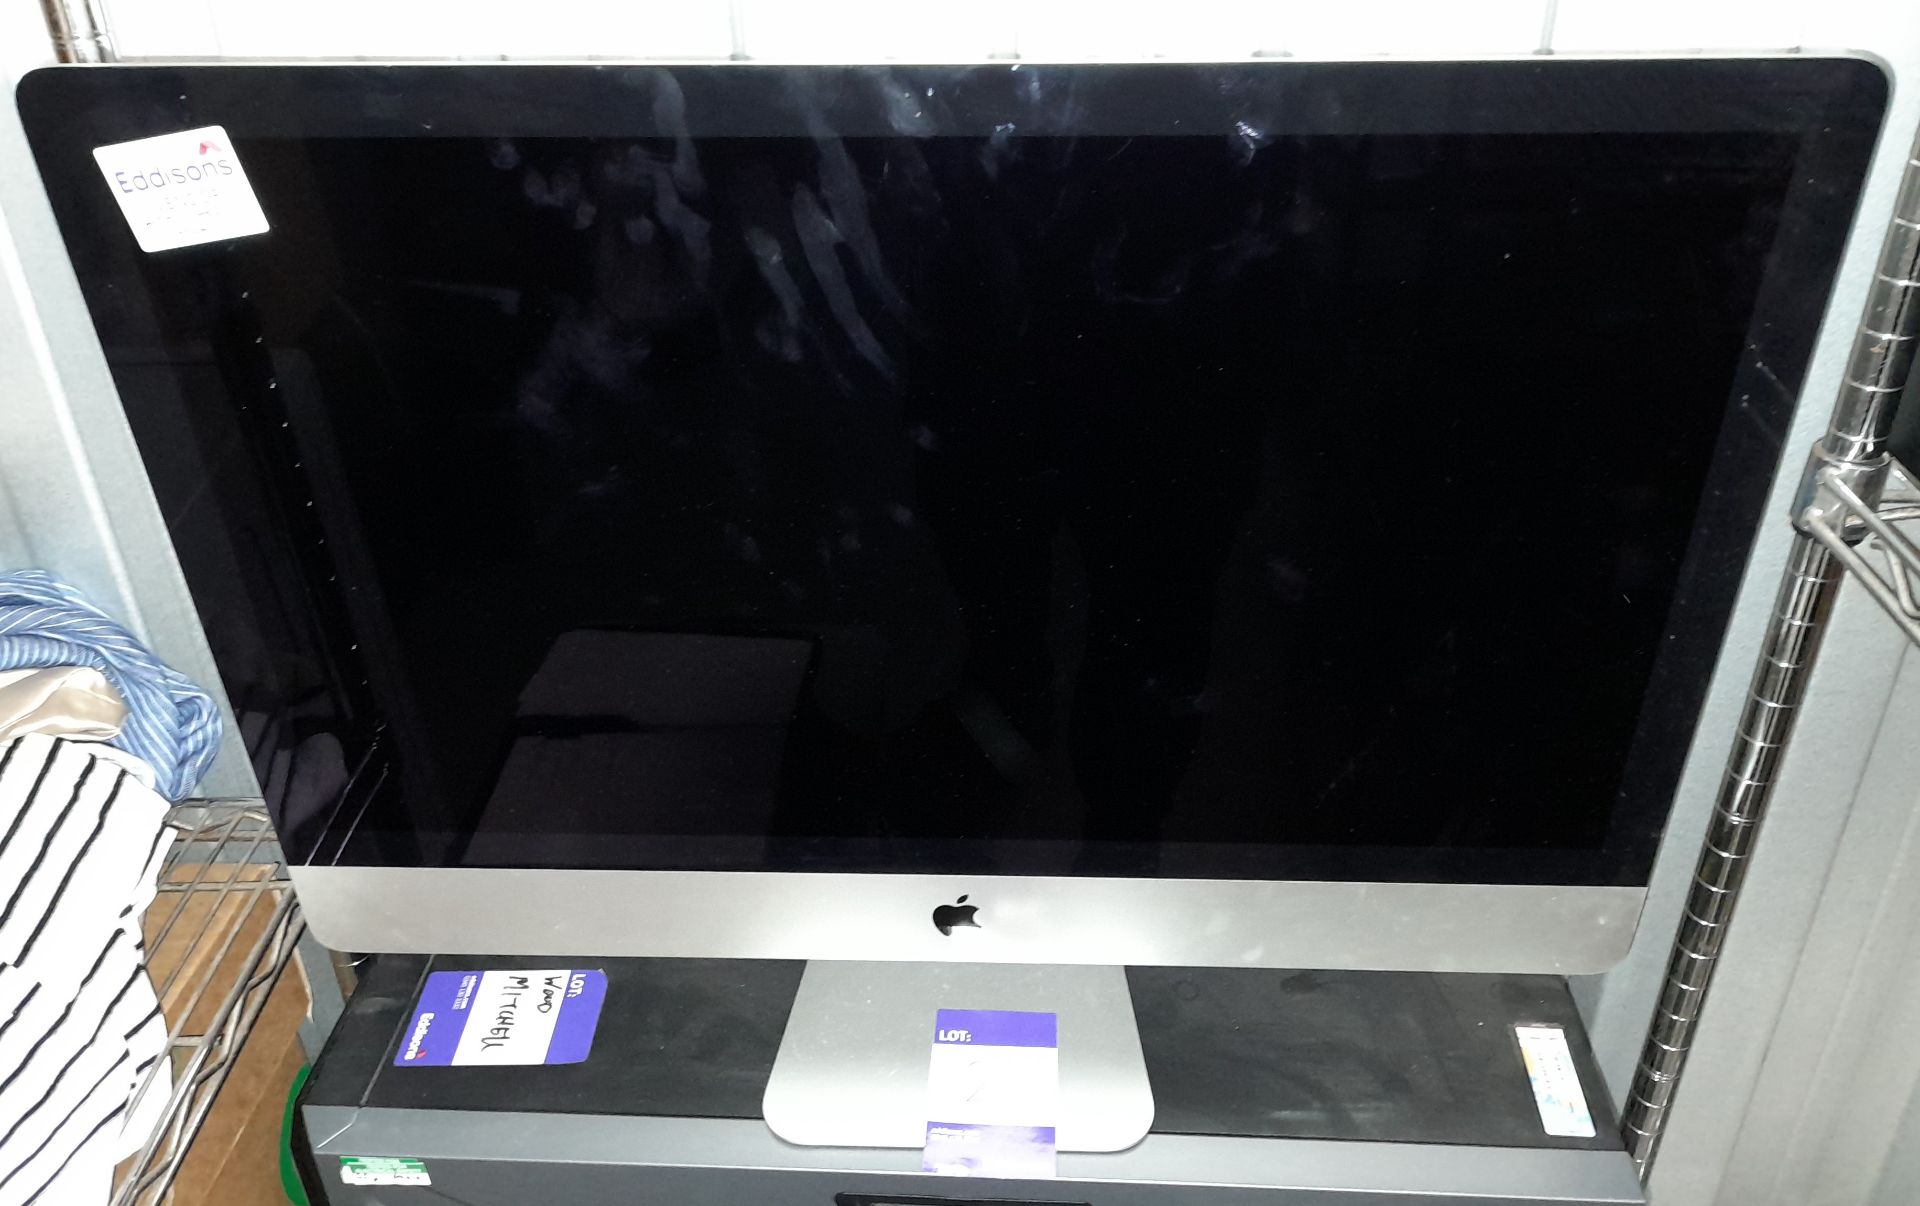 Apple iMac (27-inch, Late 2013), Model A1419, EMC No: 2639, Serial Number C02MR31GF8J4